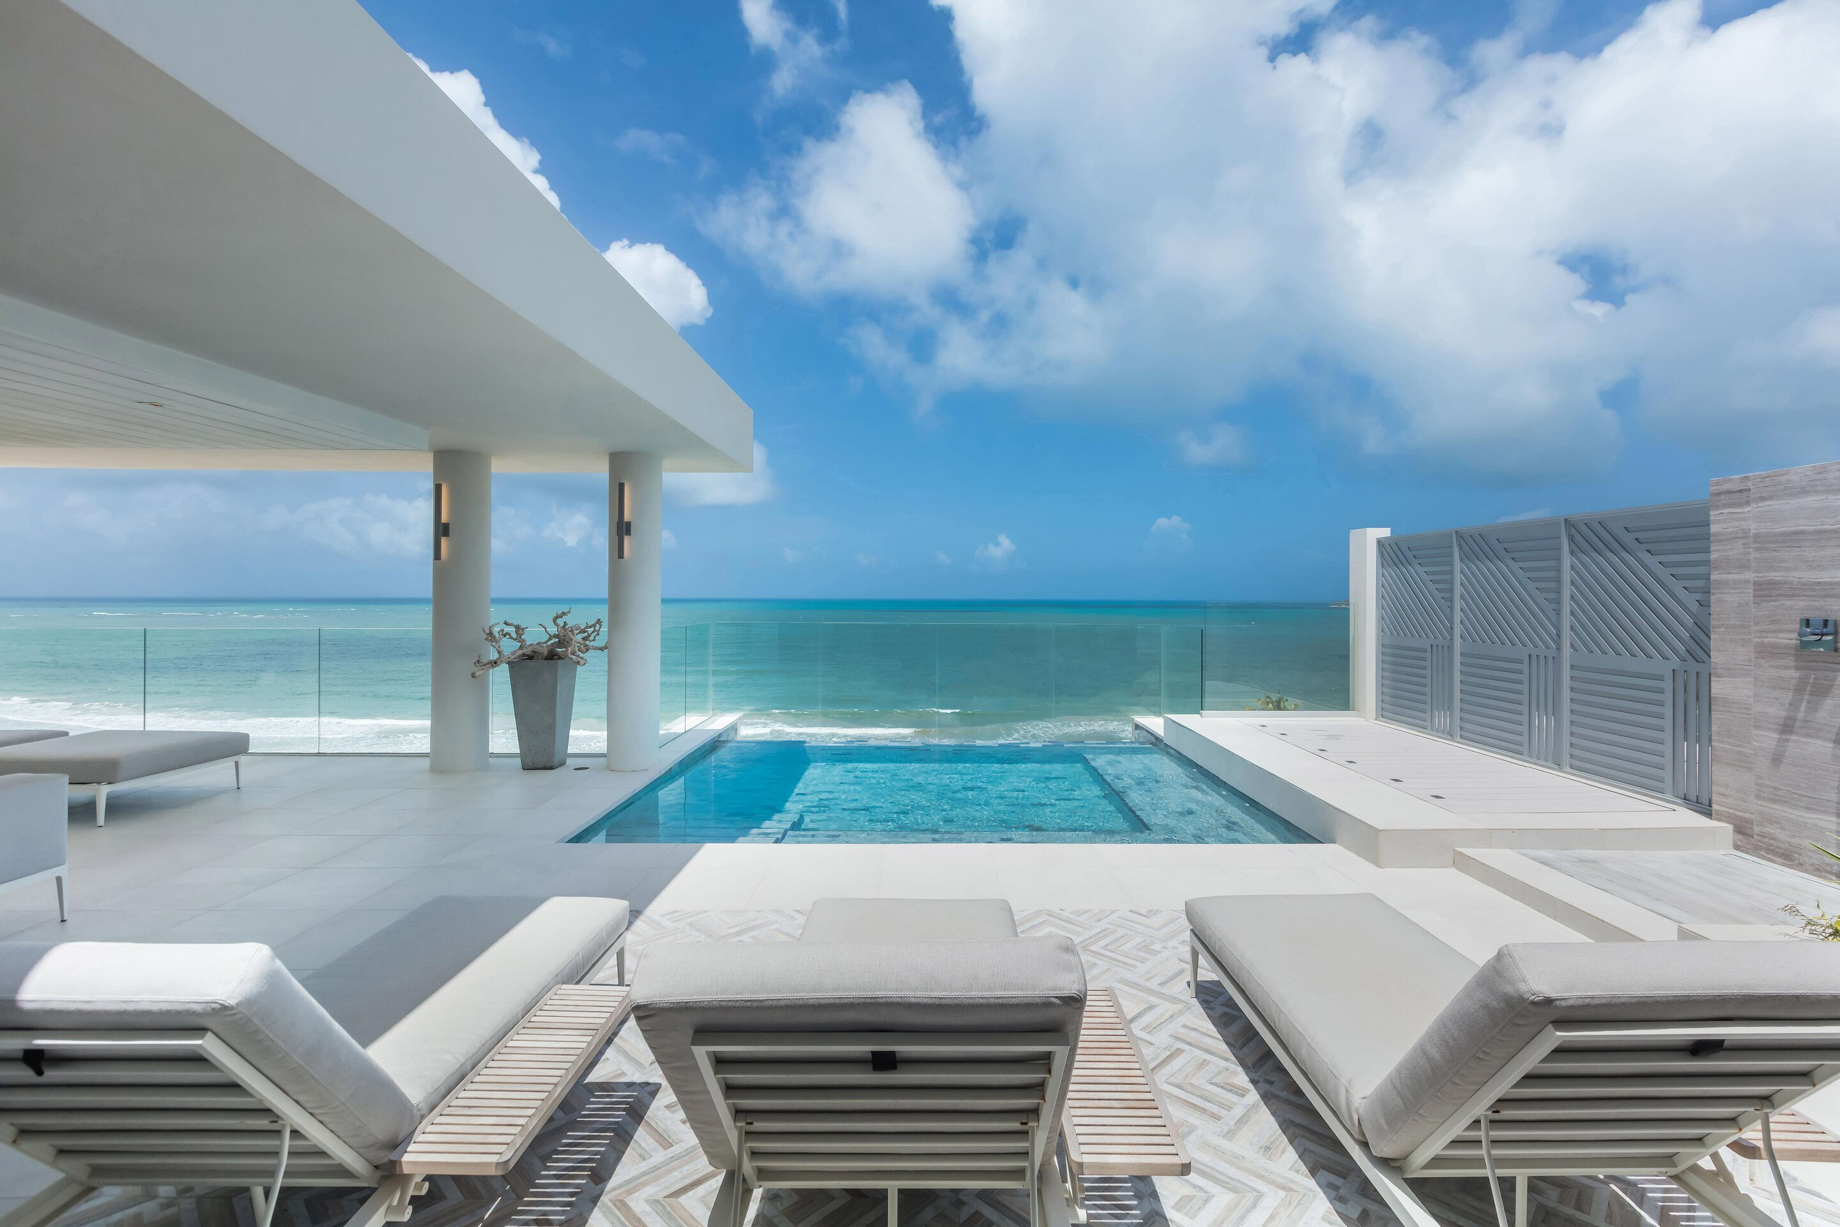 The St. Regis Bahia Beach Resort – Rio Grande, Puerto Rico – Ocean Drive Residences Private Penthouse Pool View